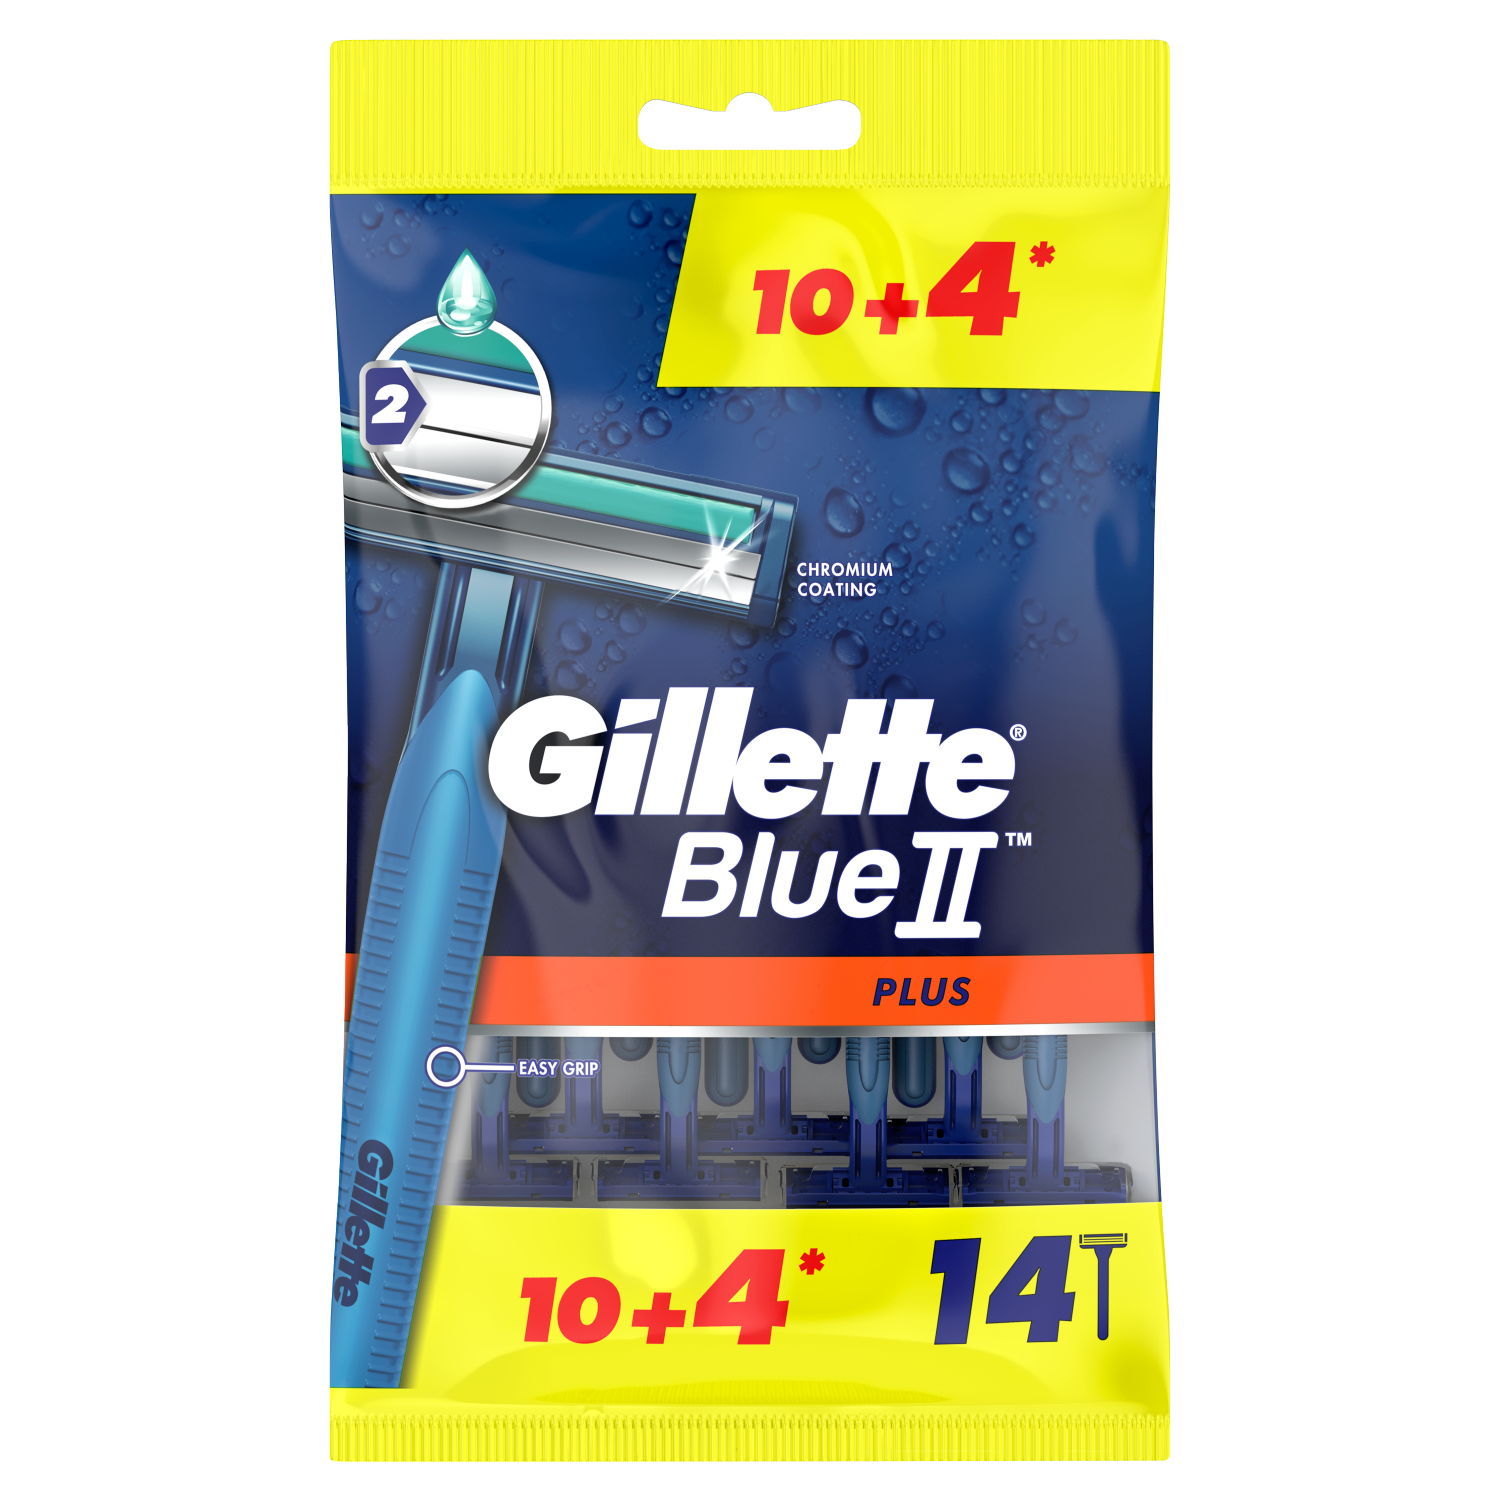 цена Gillette Blue II Plus мужские бритвы, 10+4 шт/уп.